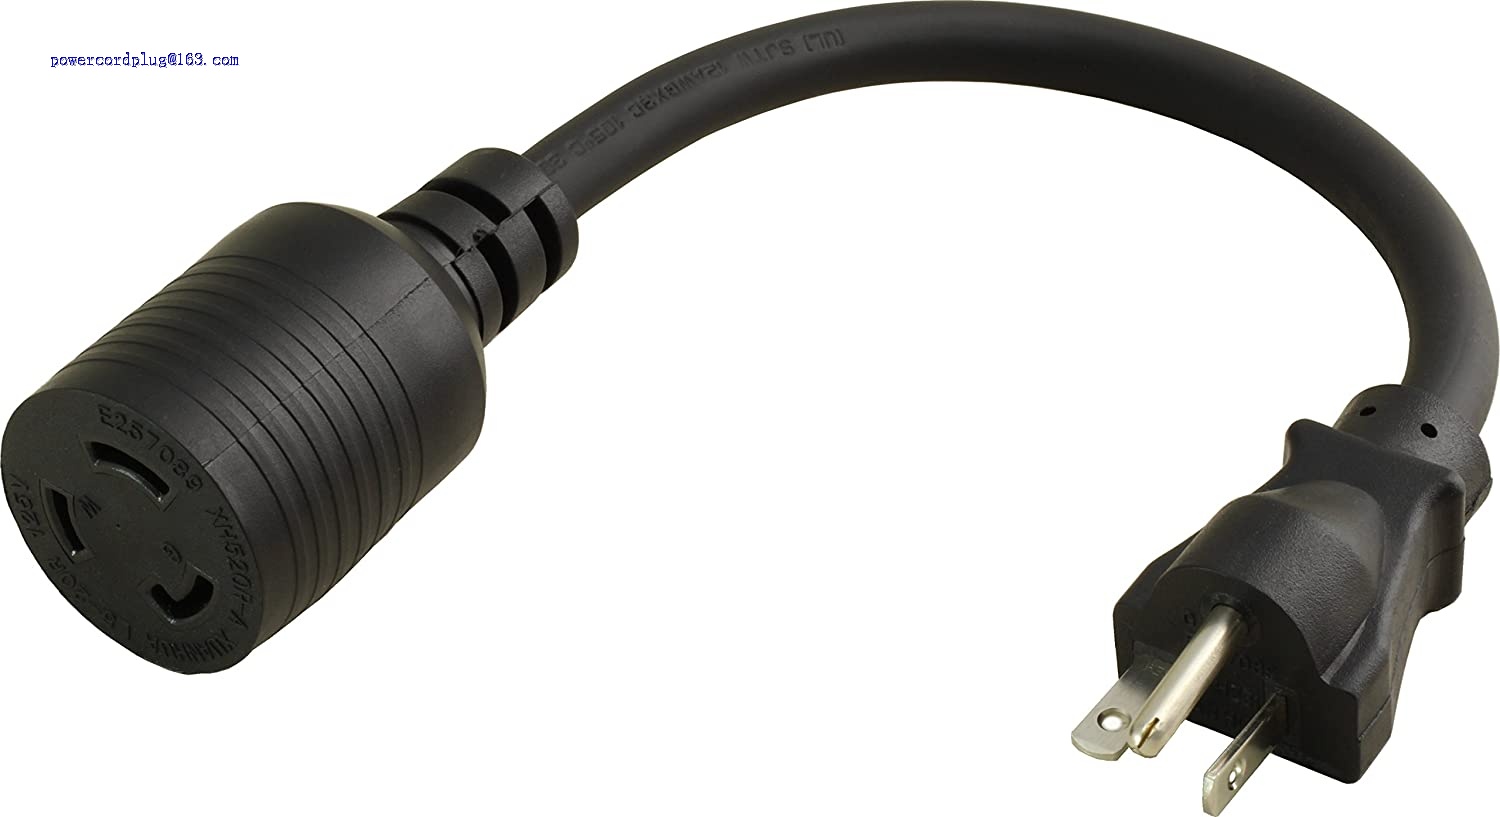 NEMA 5-20P 20Amp 125Volt Plug to Locking 20Amp L5-20R Female Connector Adapter Cord